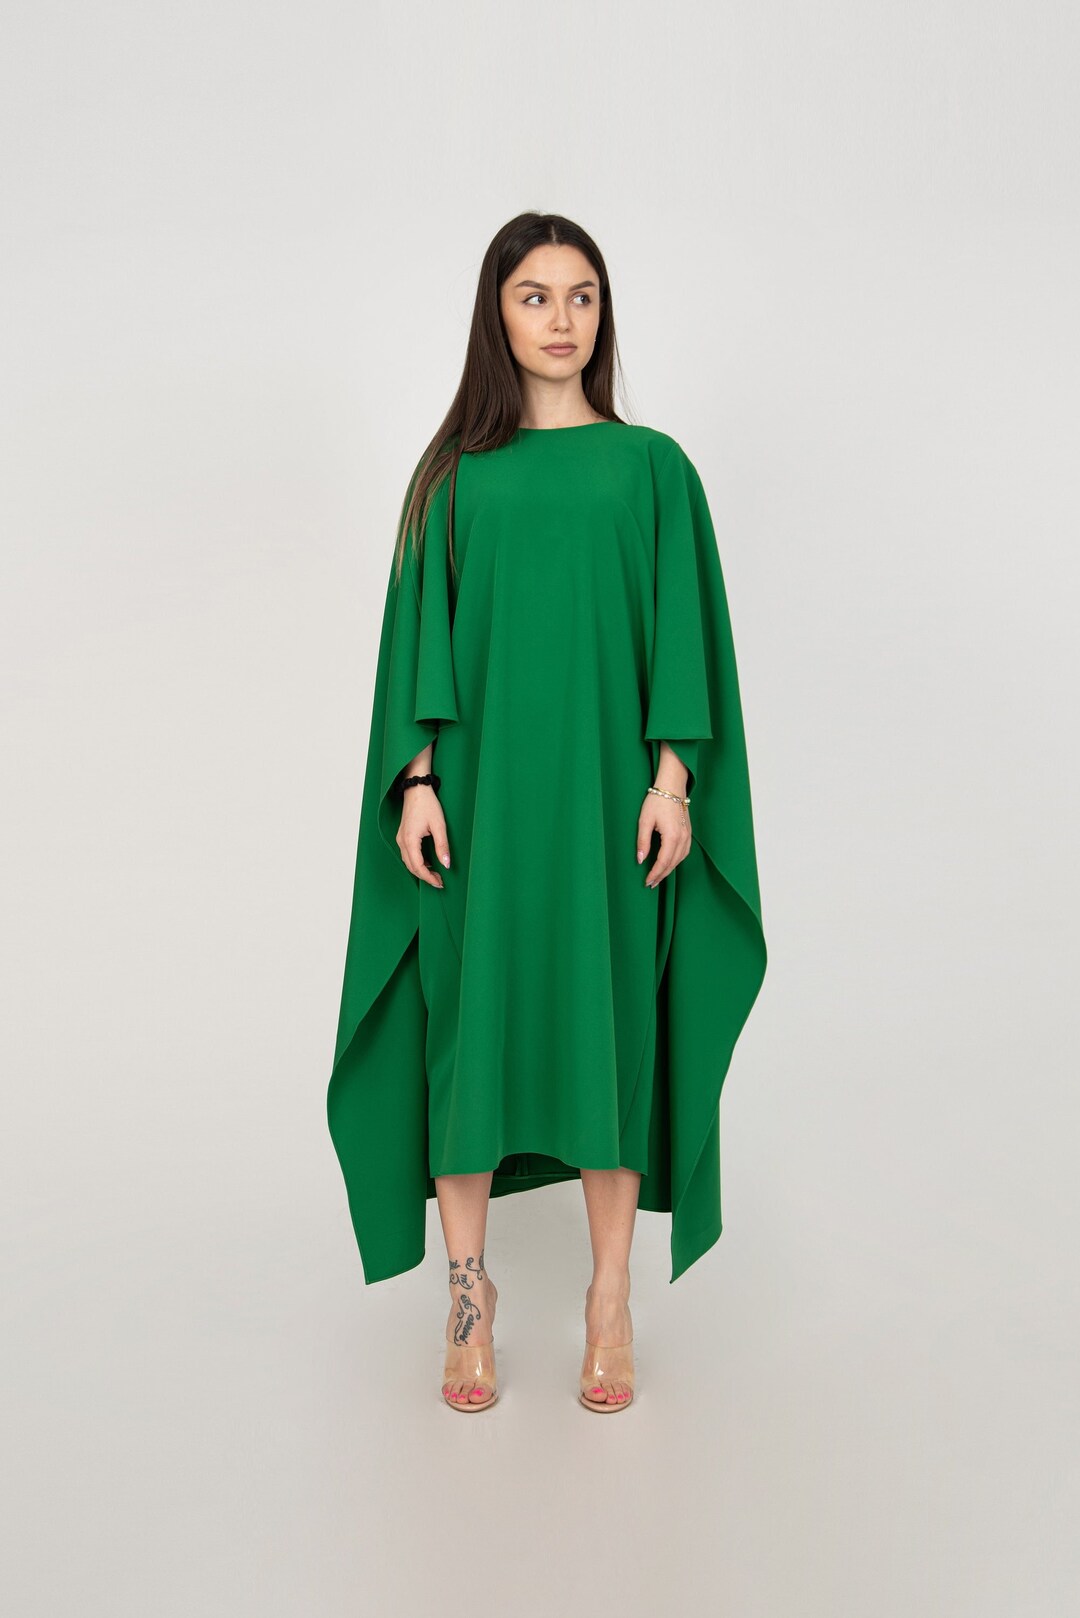 Green Cape Dress/oversized Dress/elegant Flowing Dress/handmade Dress ...